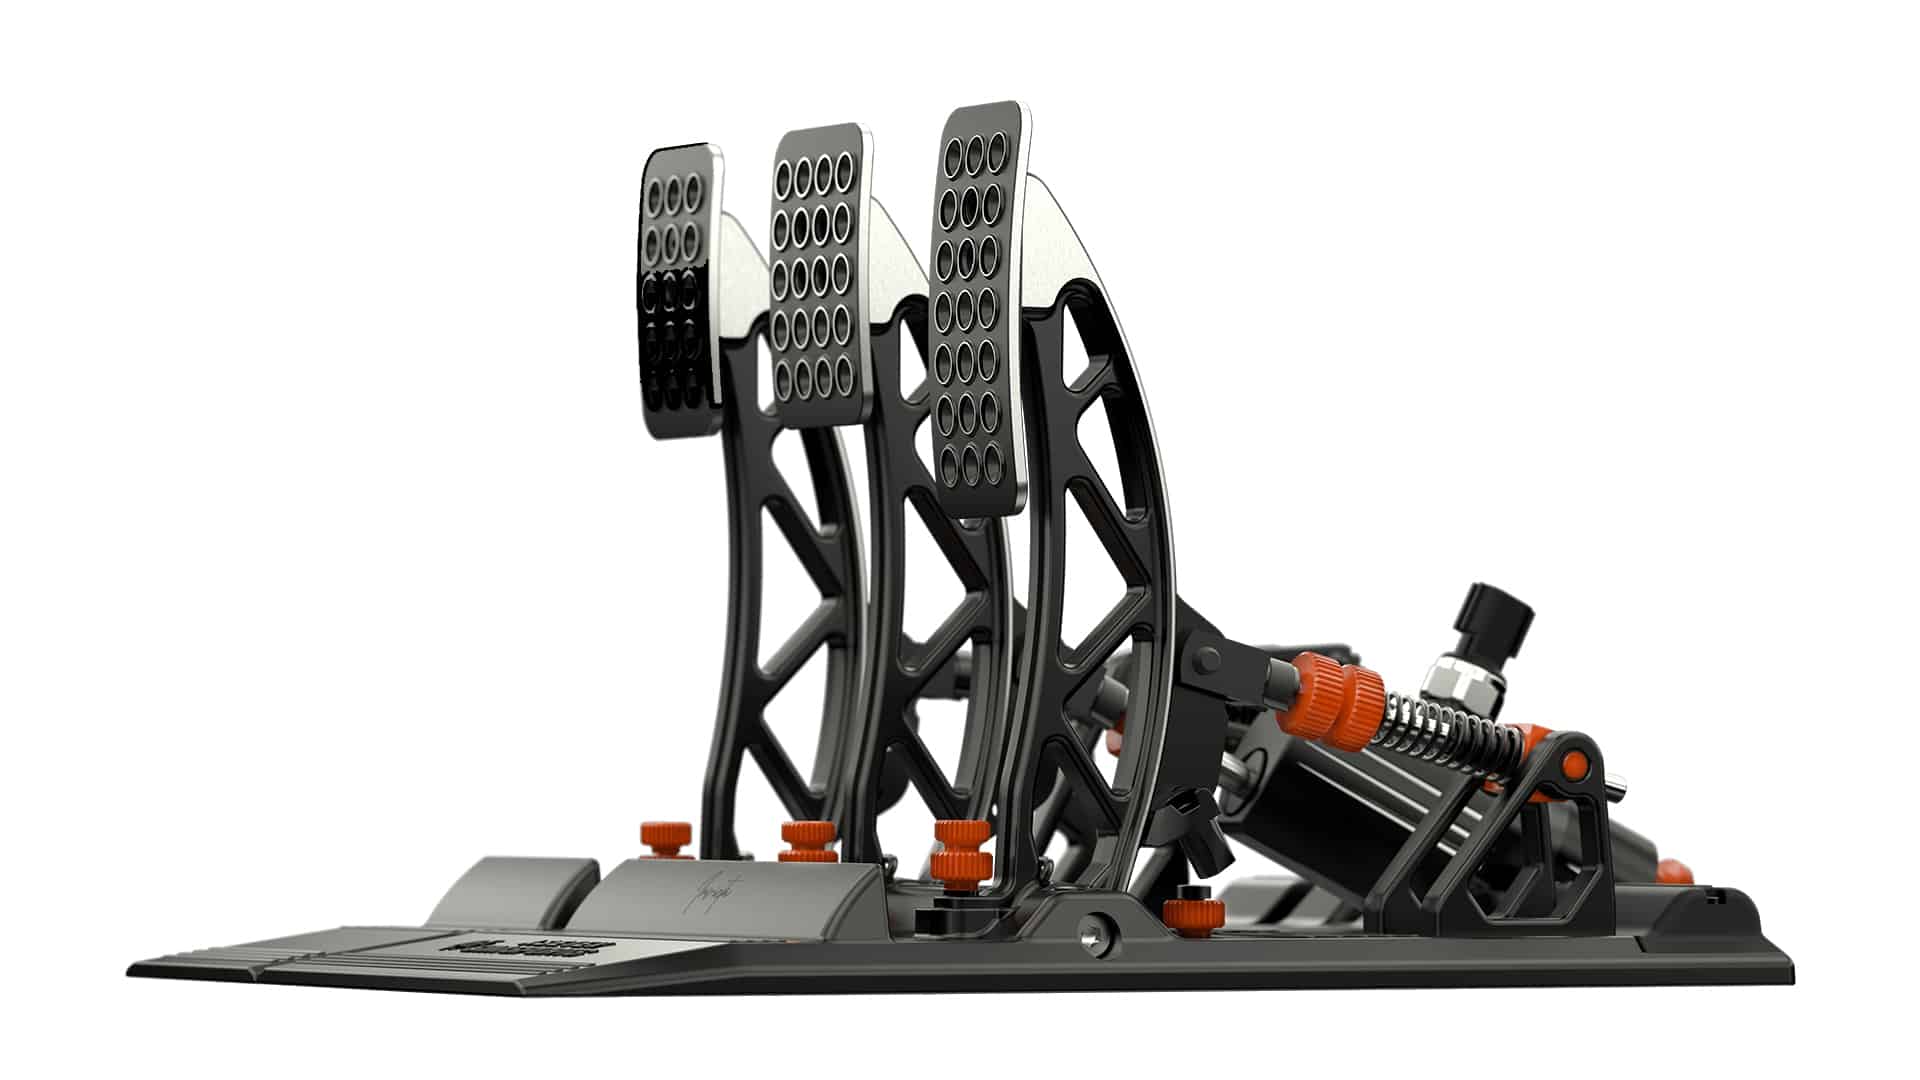 Aseteks-SimSports-Invicta-hydraulic-sim-racing-pedals-are-unbelievable.jpg